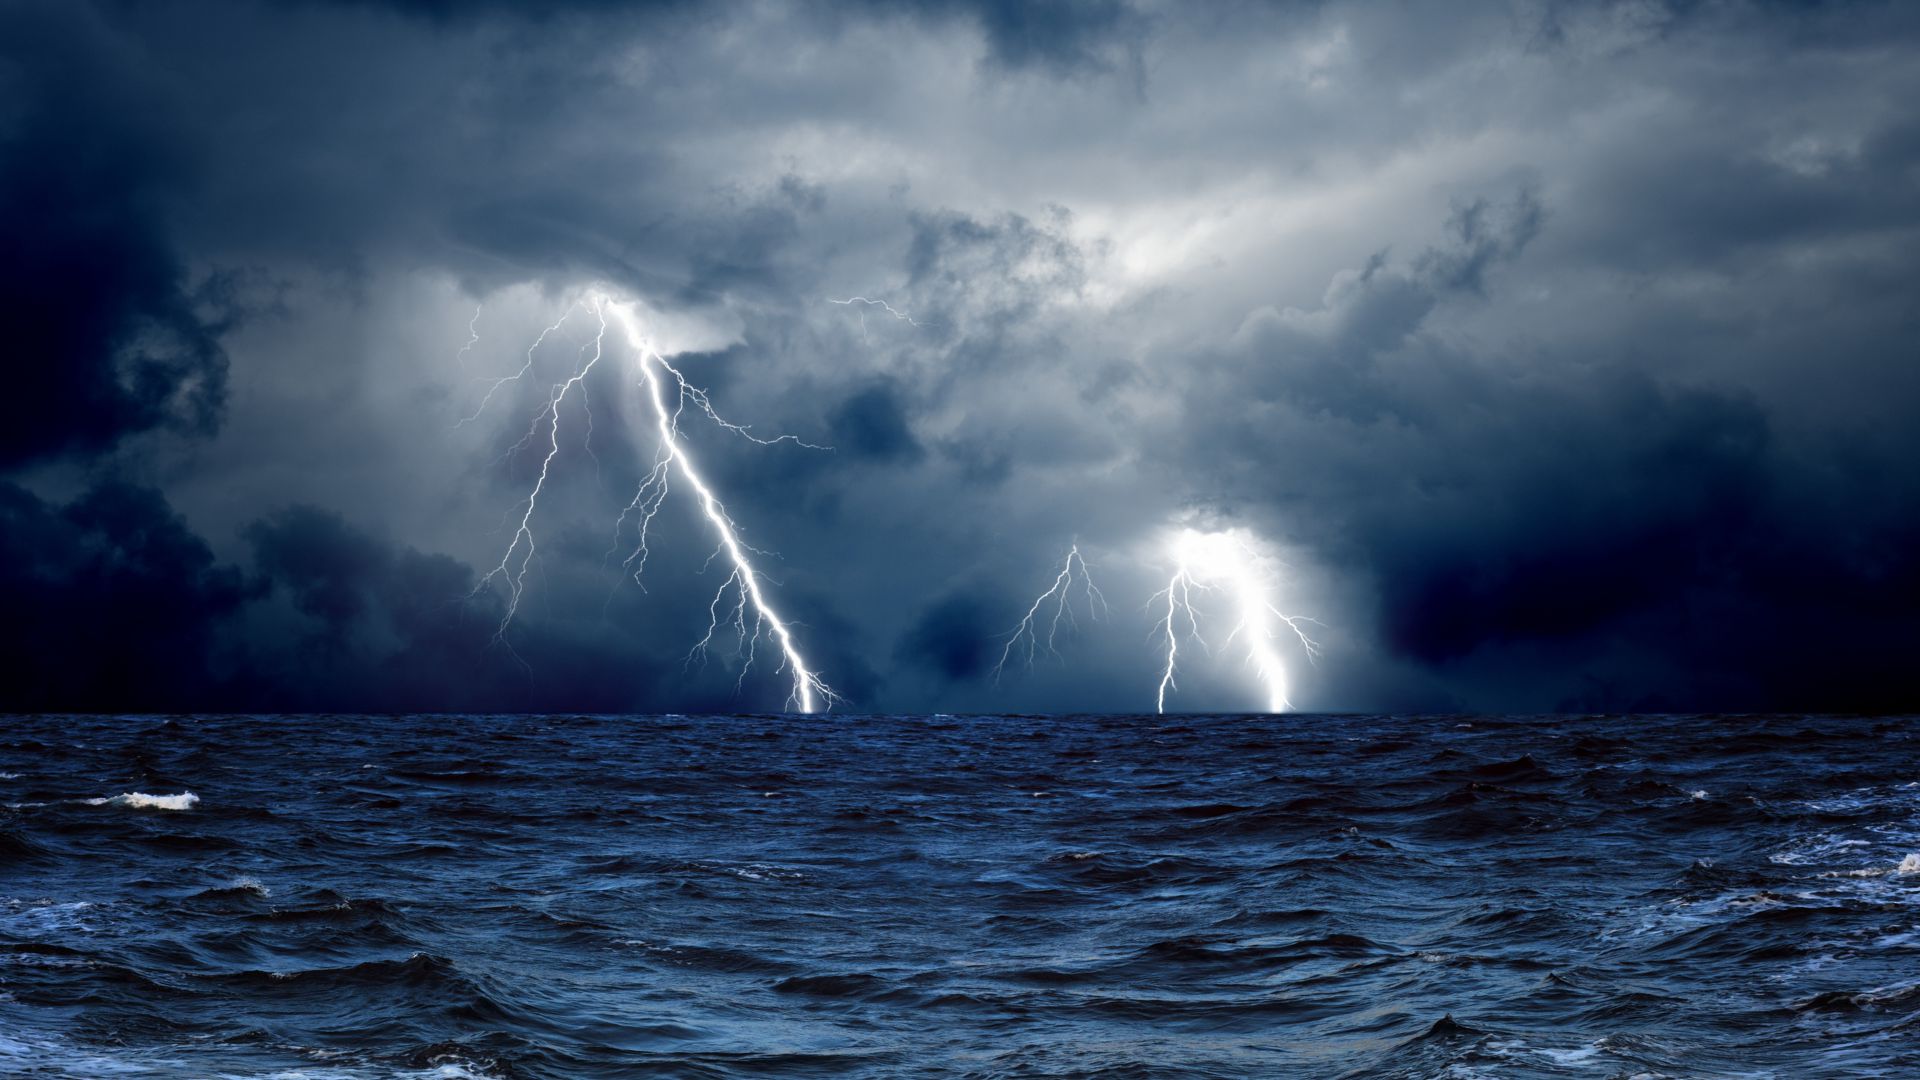 Море, 5k, 4k, 8k, океан, шторм, молнии, облака, Sea, 5k, 4k wallpaper, 8k, ocean, storm, lightning, clouds (horizontal)